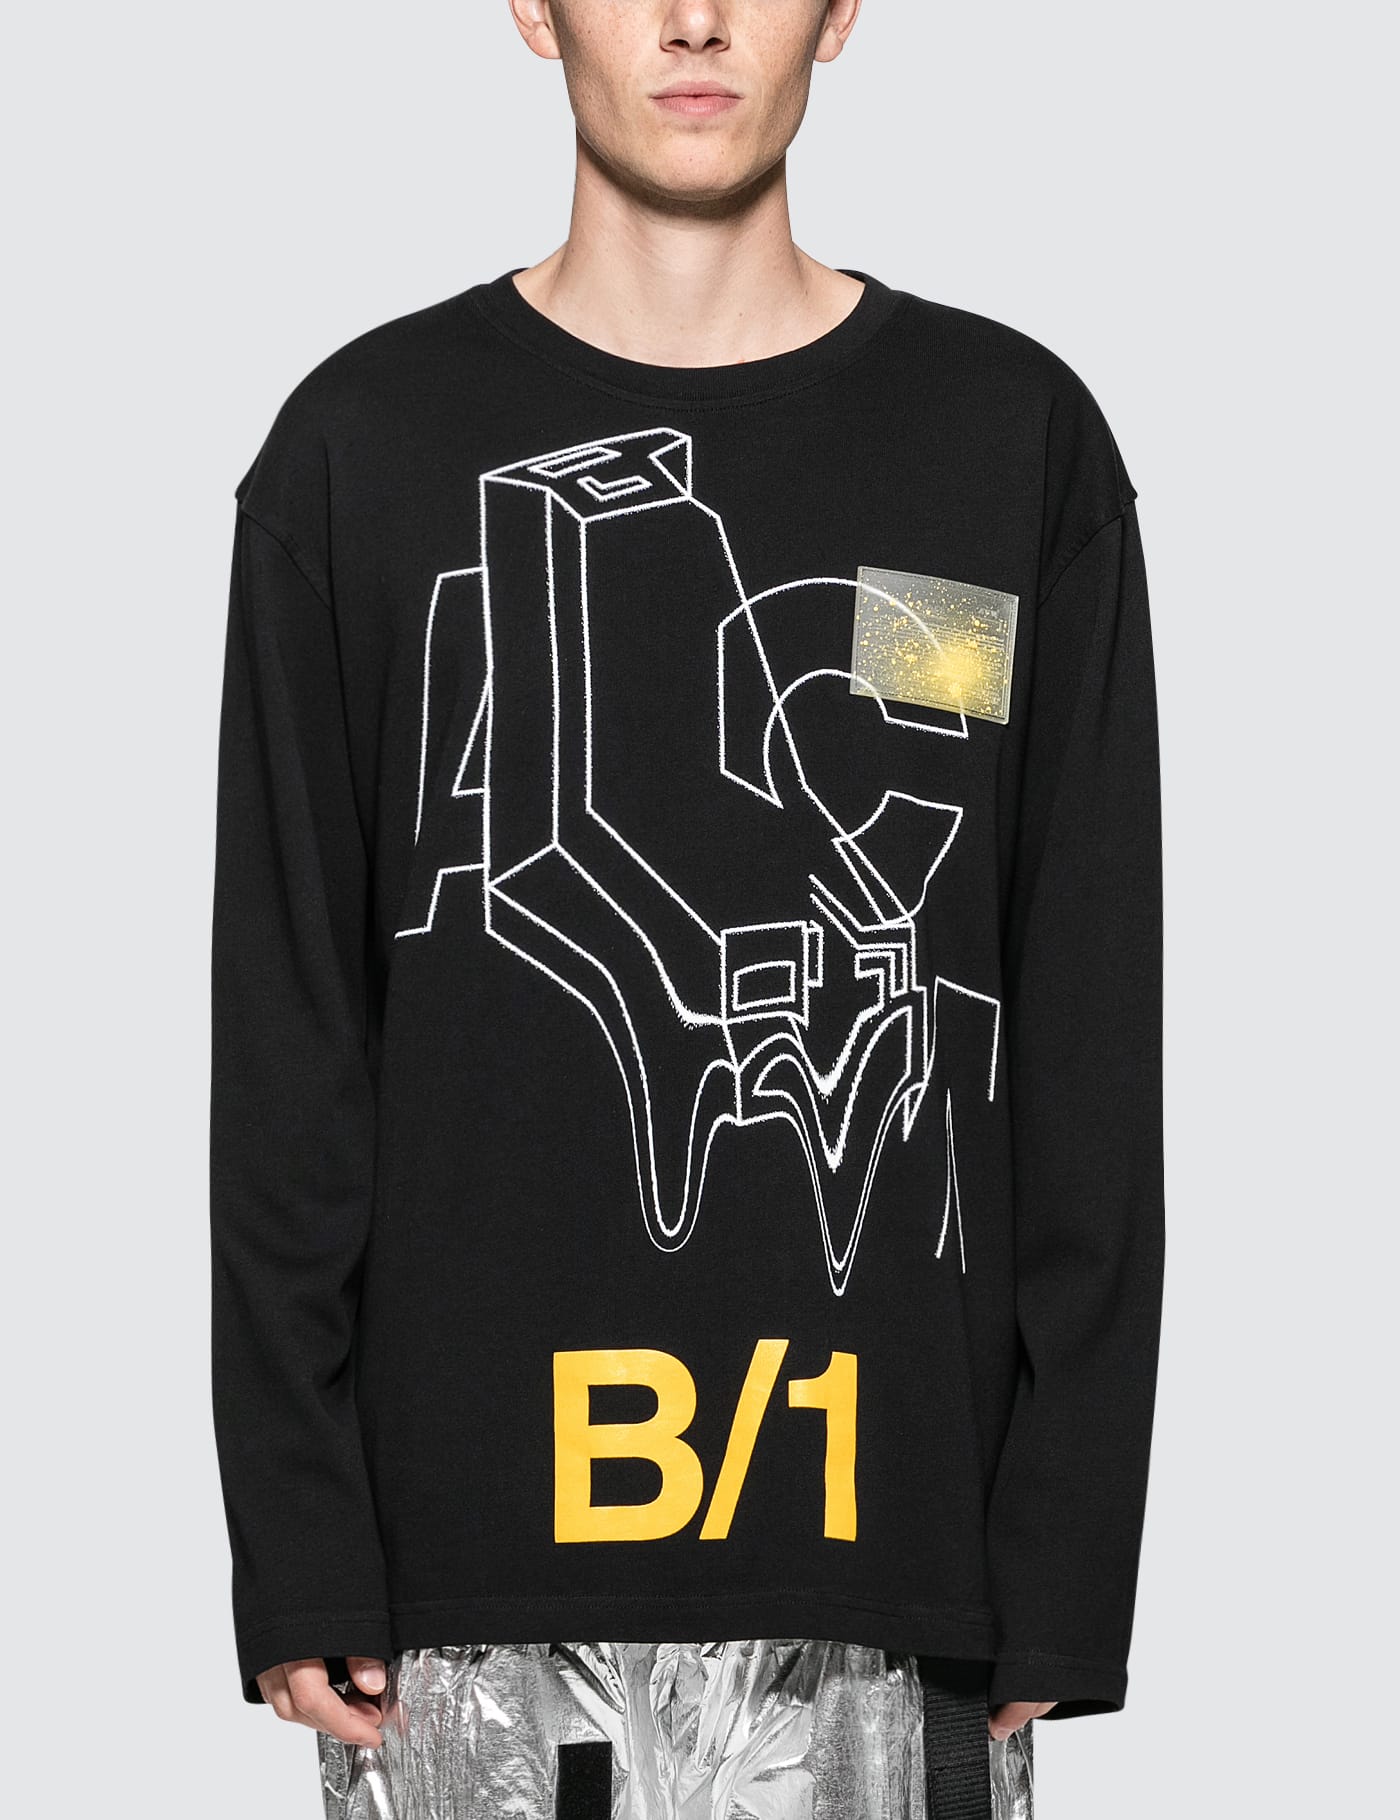 A-COLD-WALL* - B1 L/S T-Shirt | HBX - ハイプビースト(Hypebeast)が ...